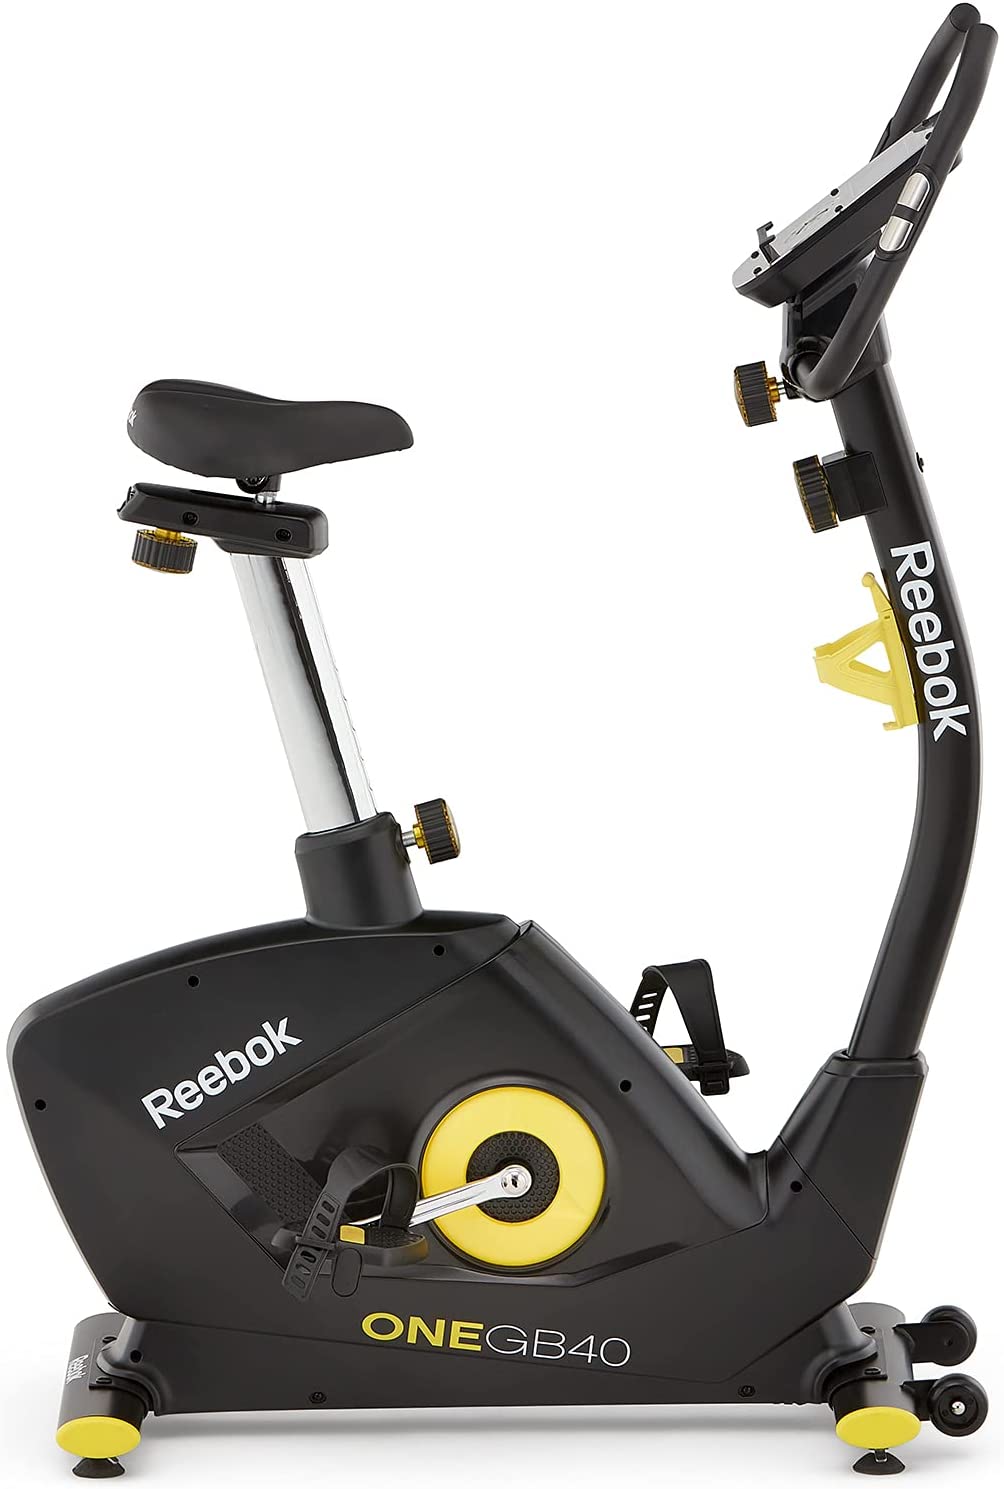 Reebok Exercise Bike GB40 - side view